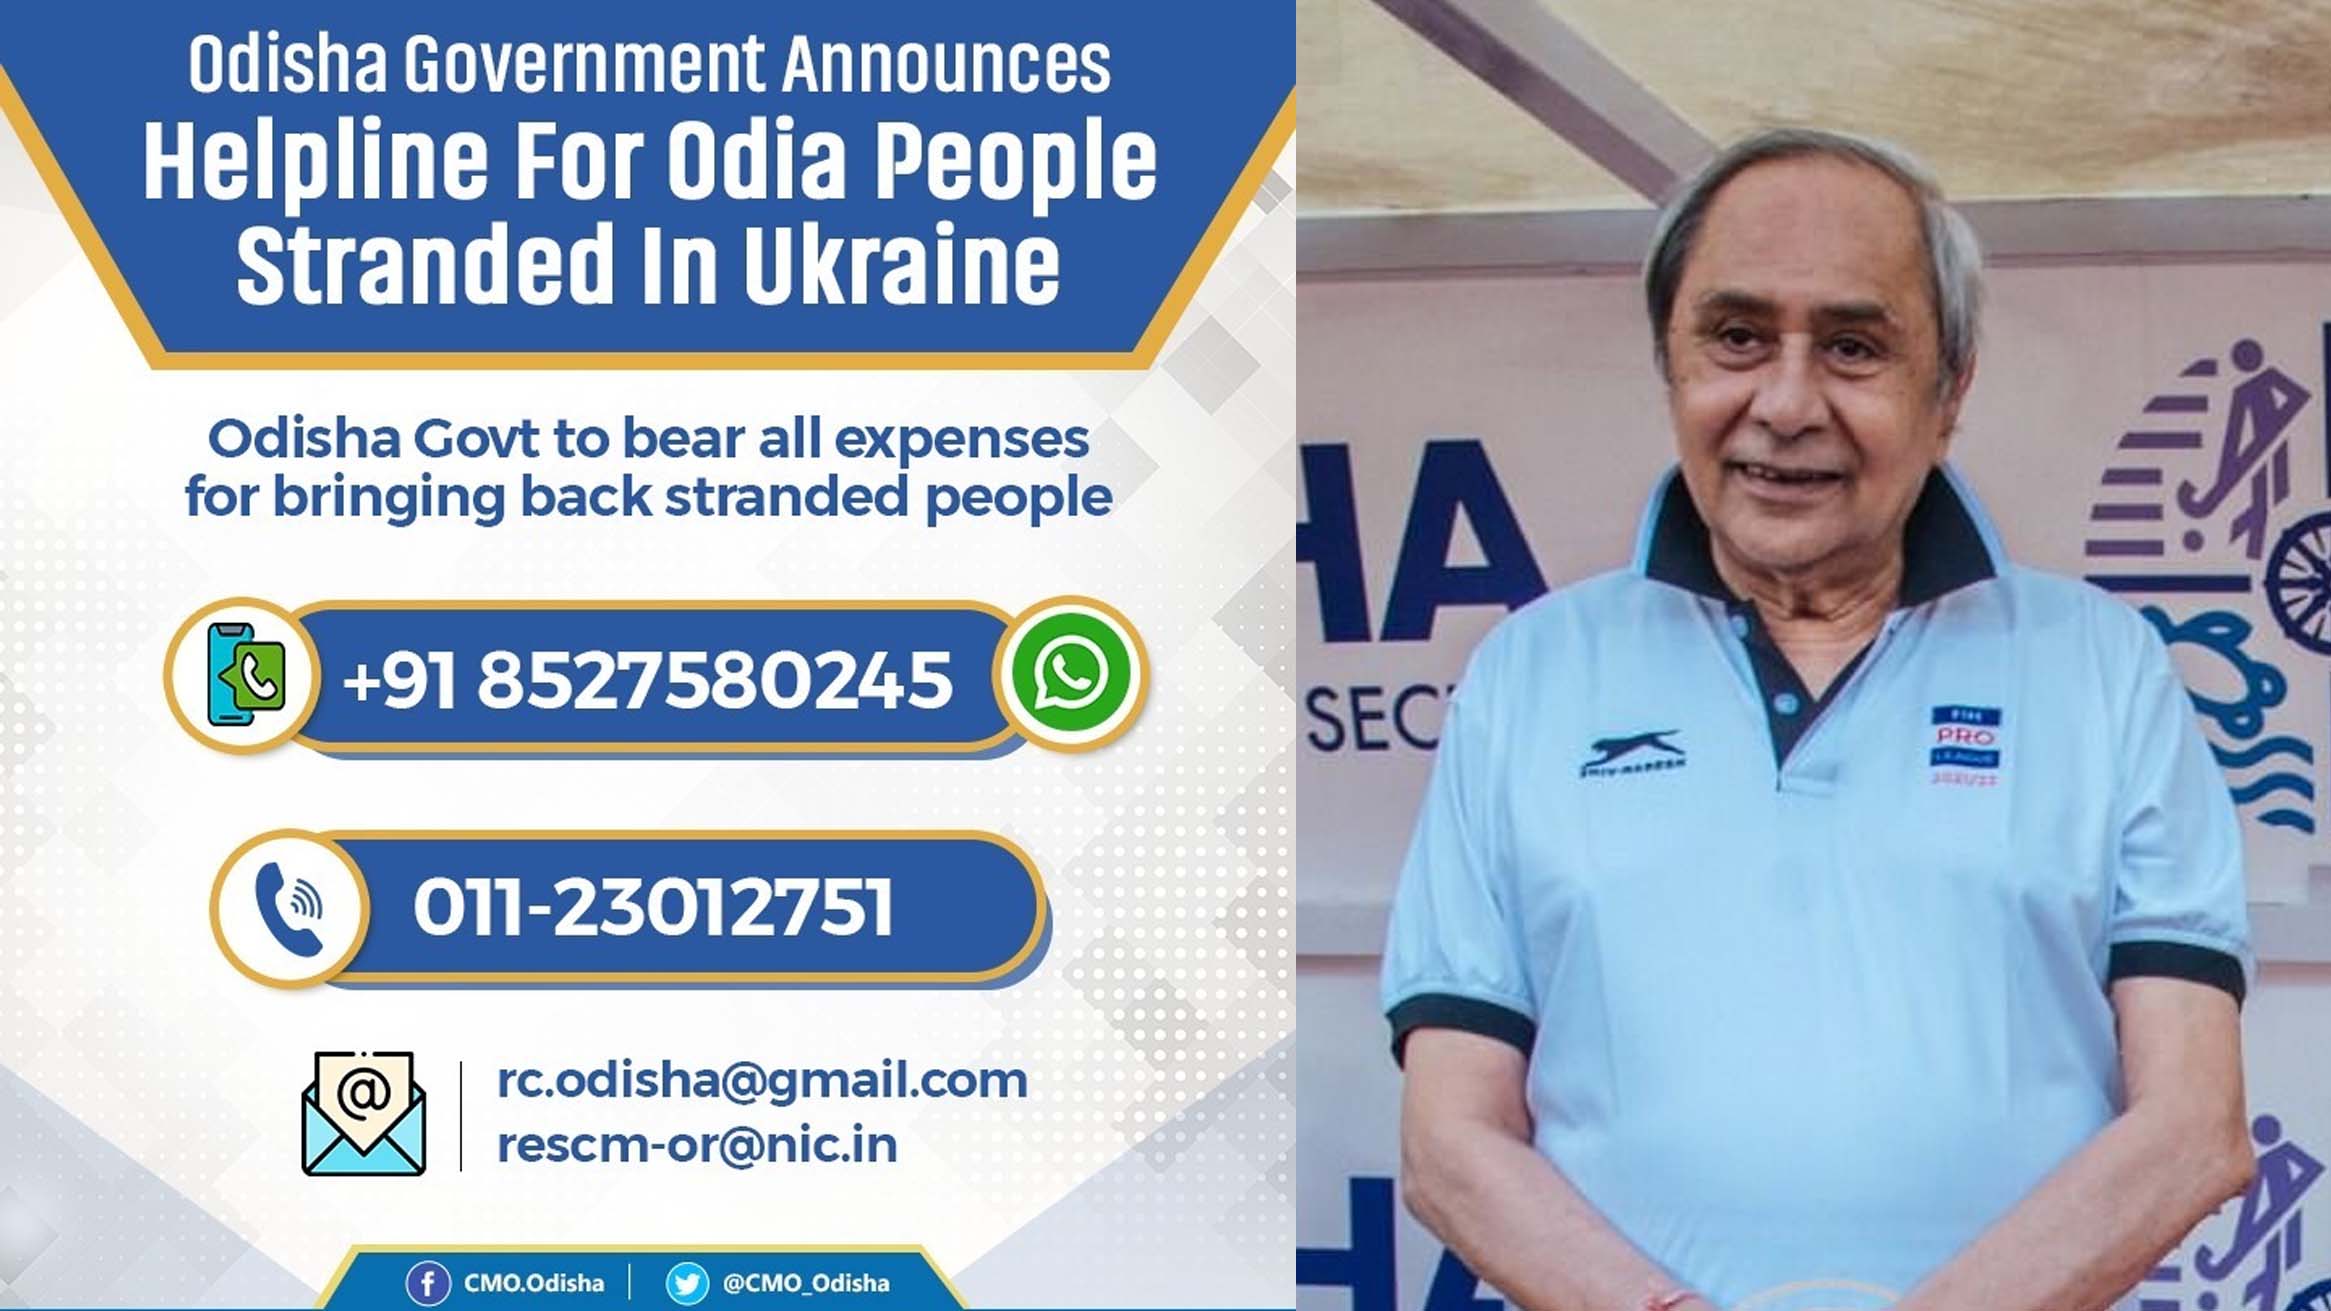 Helpline for Odias in Ukraine